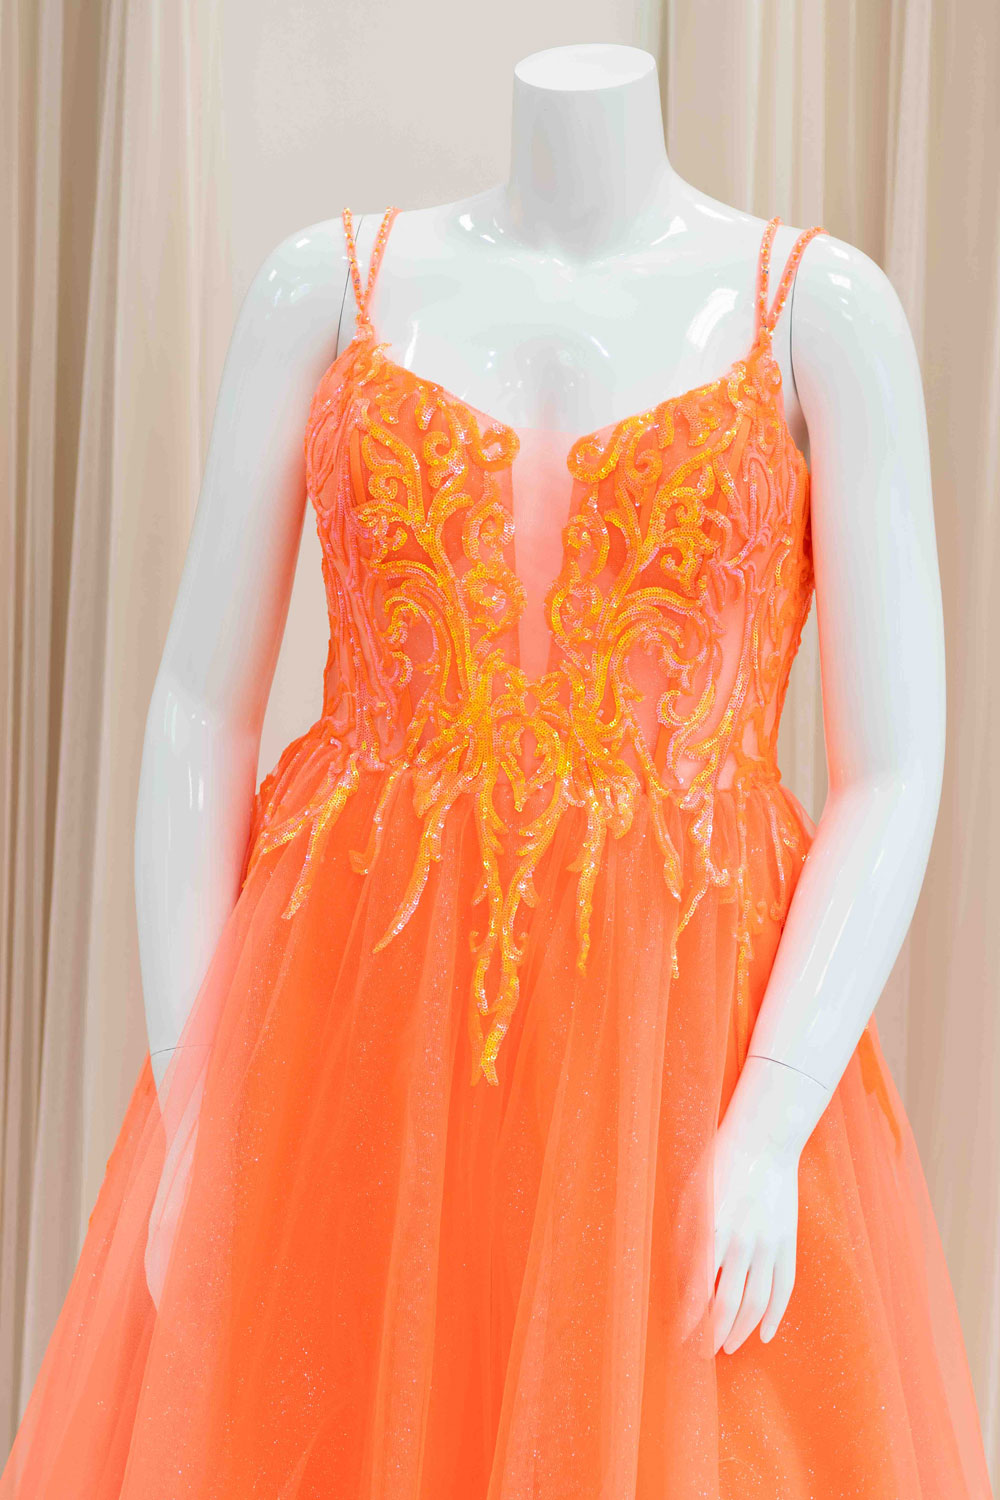 Ark & Co Orange Beaded Neckline Sexy dress Size Small | eBay